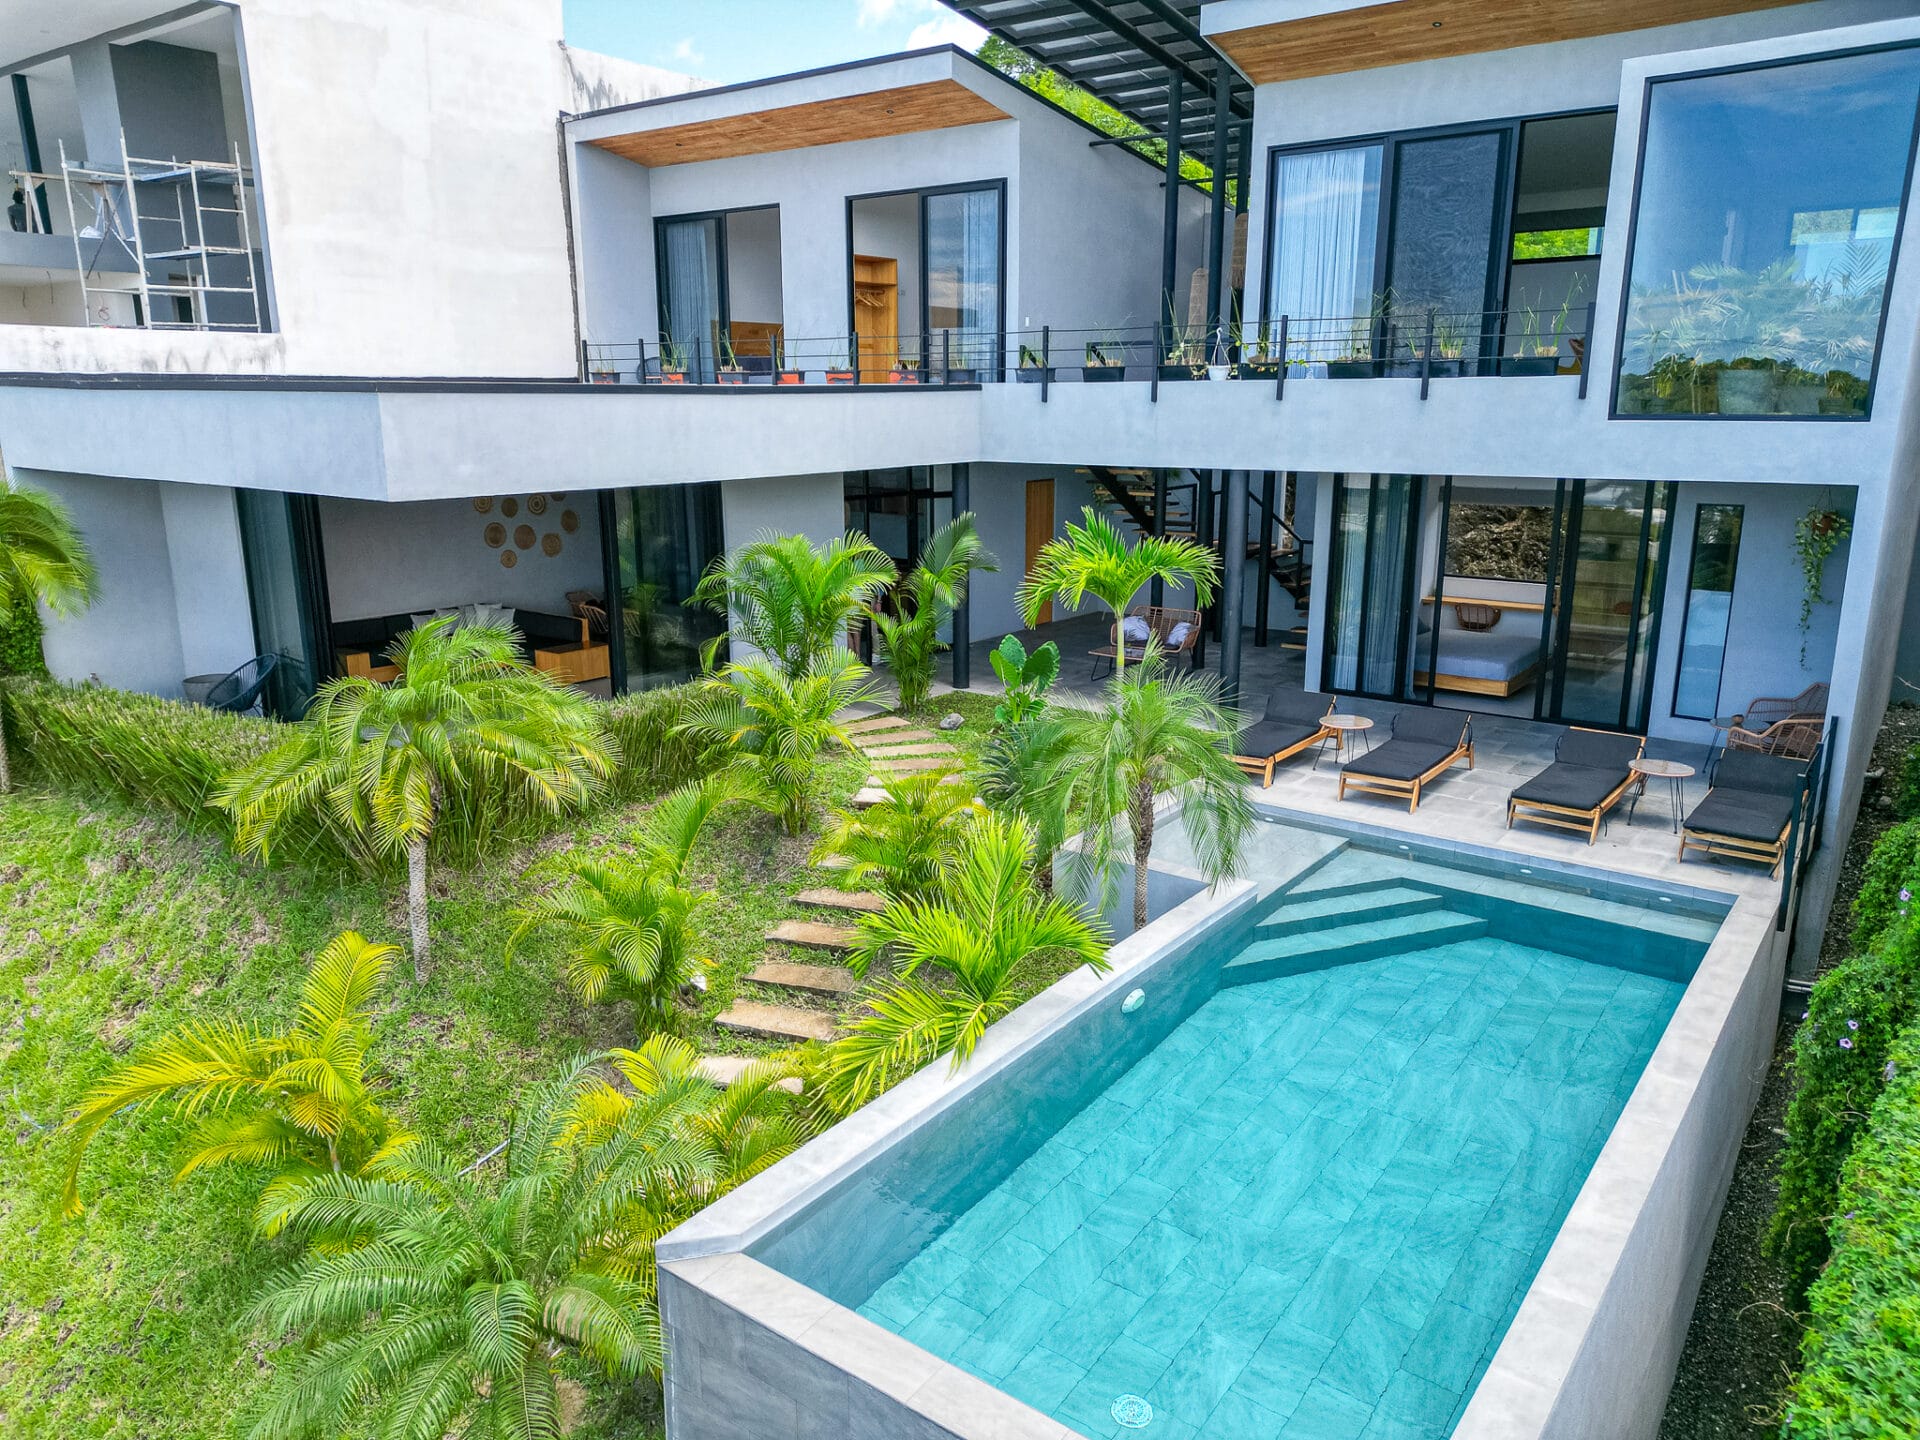 Balinese-Inspired, Ocean-View Villa Tamahills, Exceptional Rental Potential!